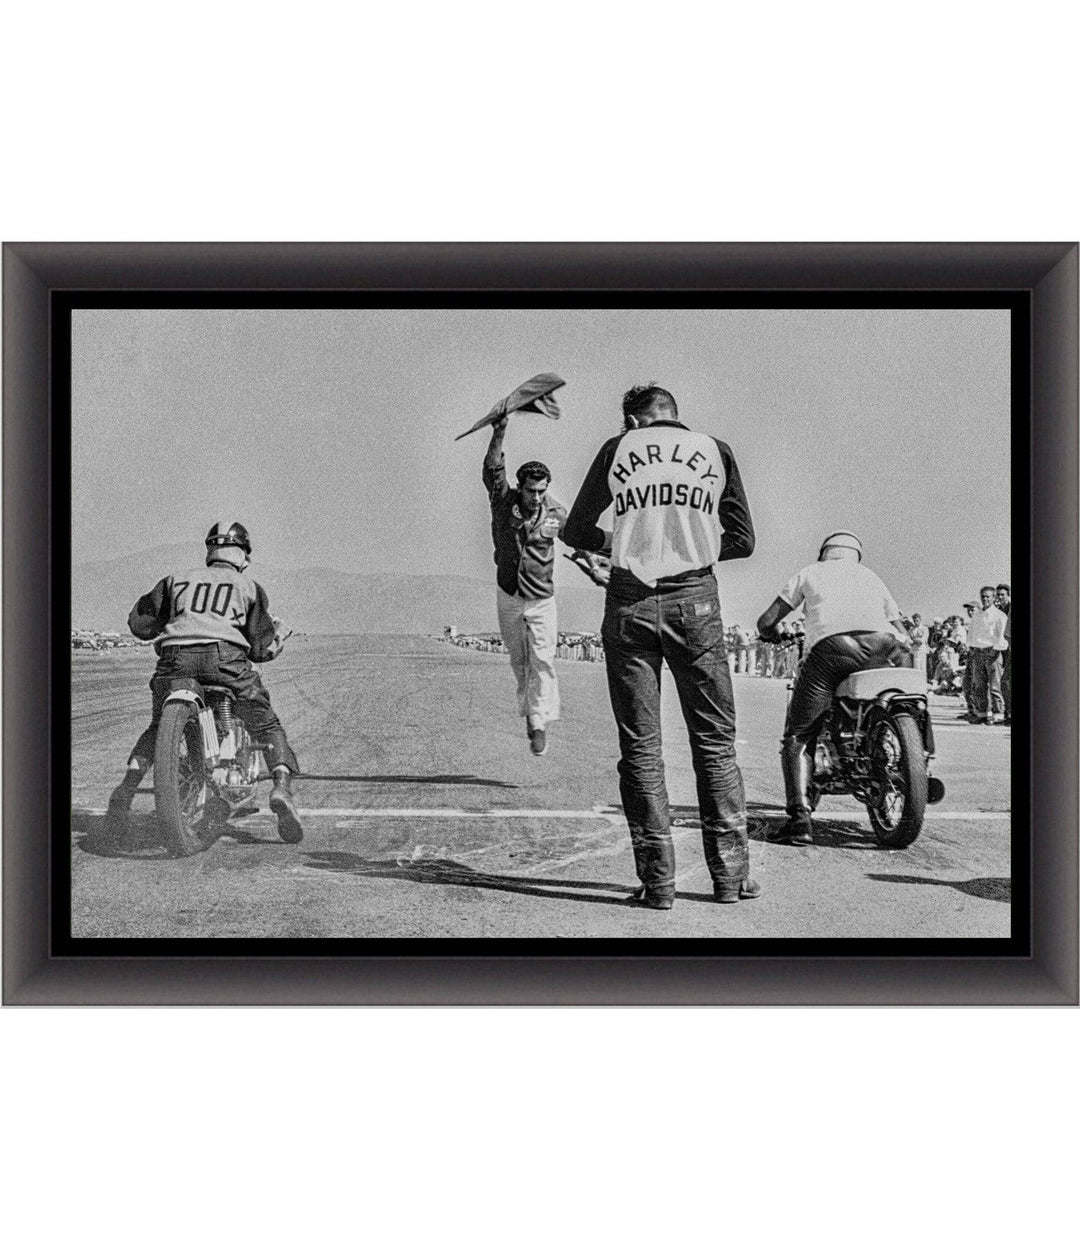 Harley Davidson drag racing vintage photo - Richard Stefani - Stefani Fine Art